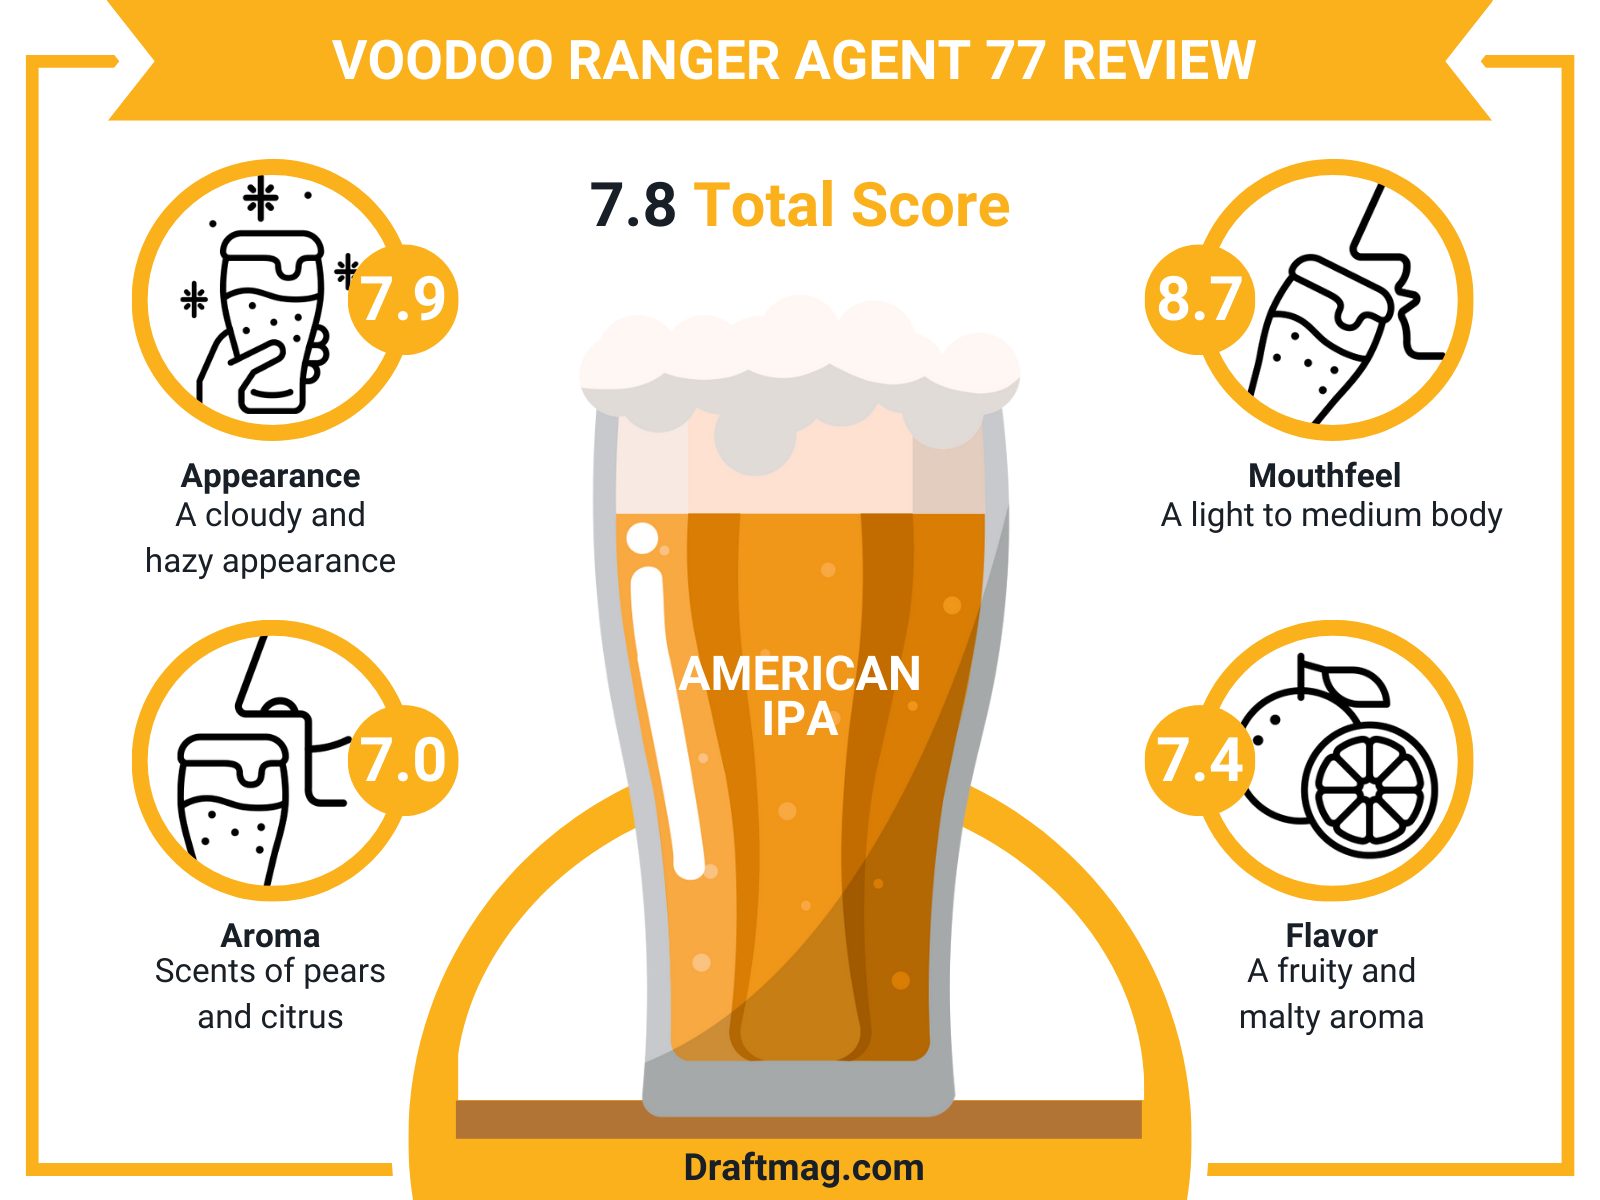 Voodoo Ranger Review Infographic